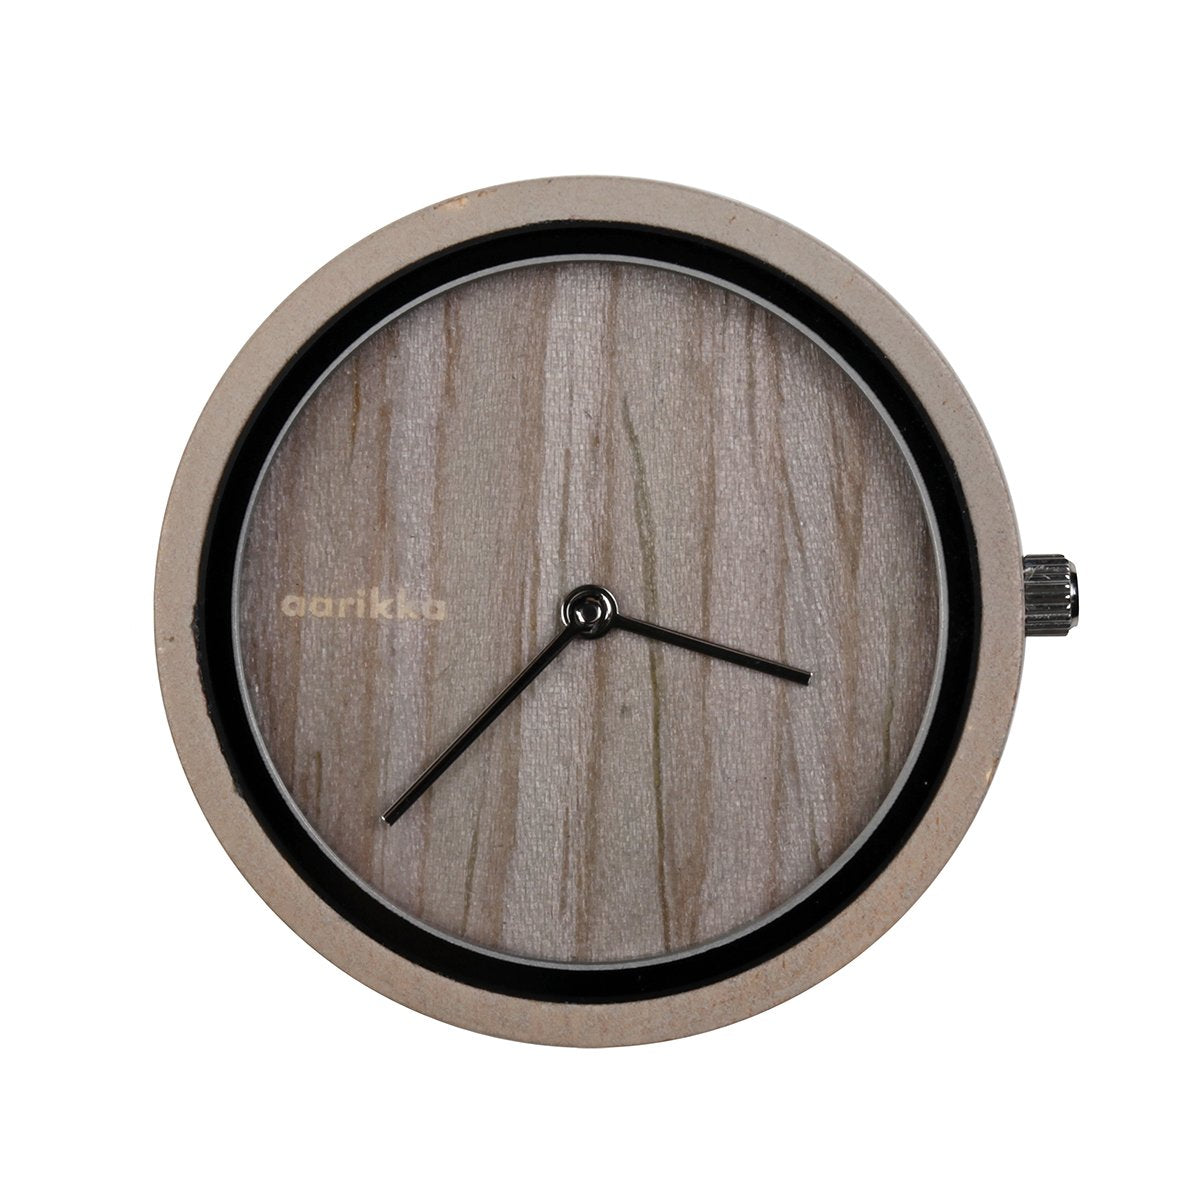 Aikapuu clock face, small, dark brown